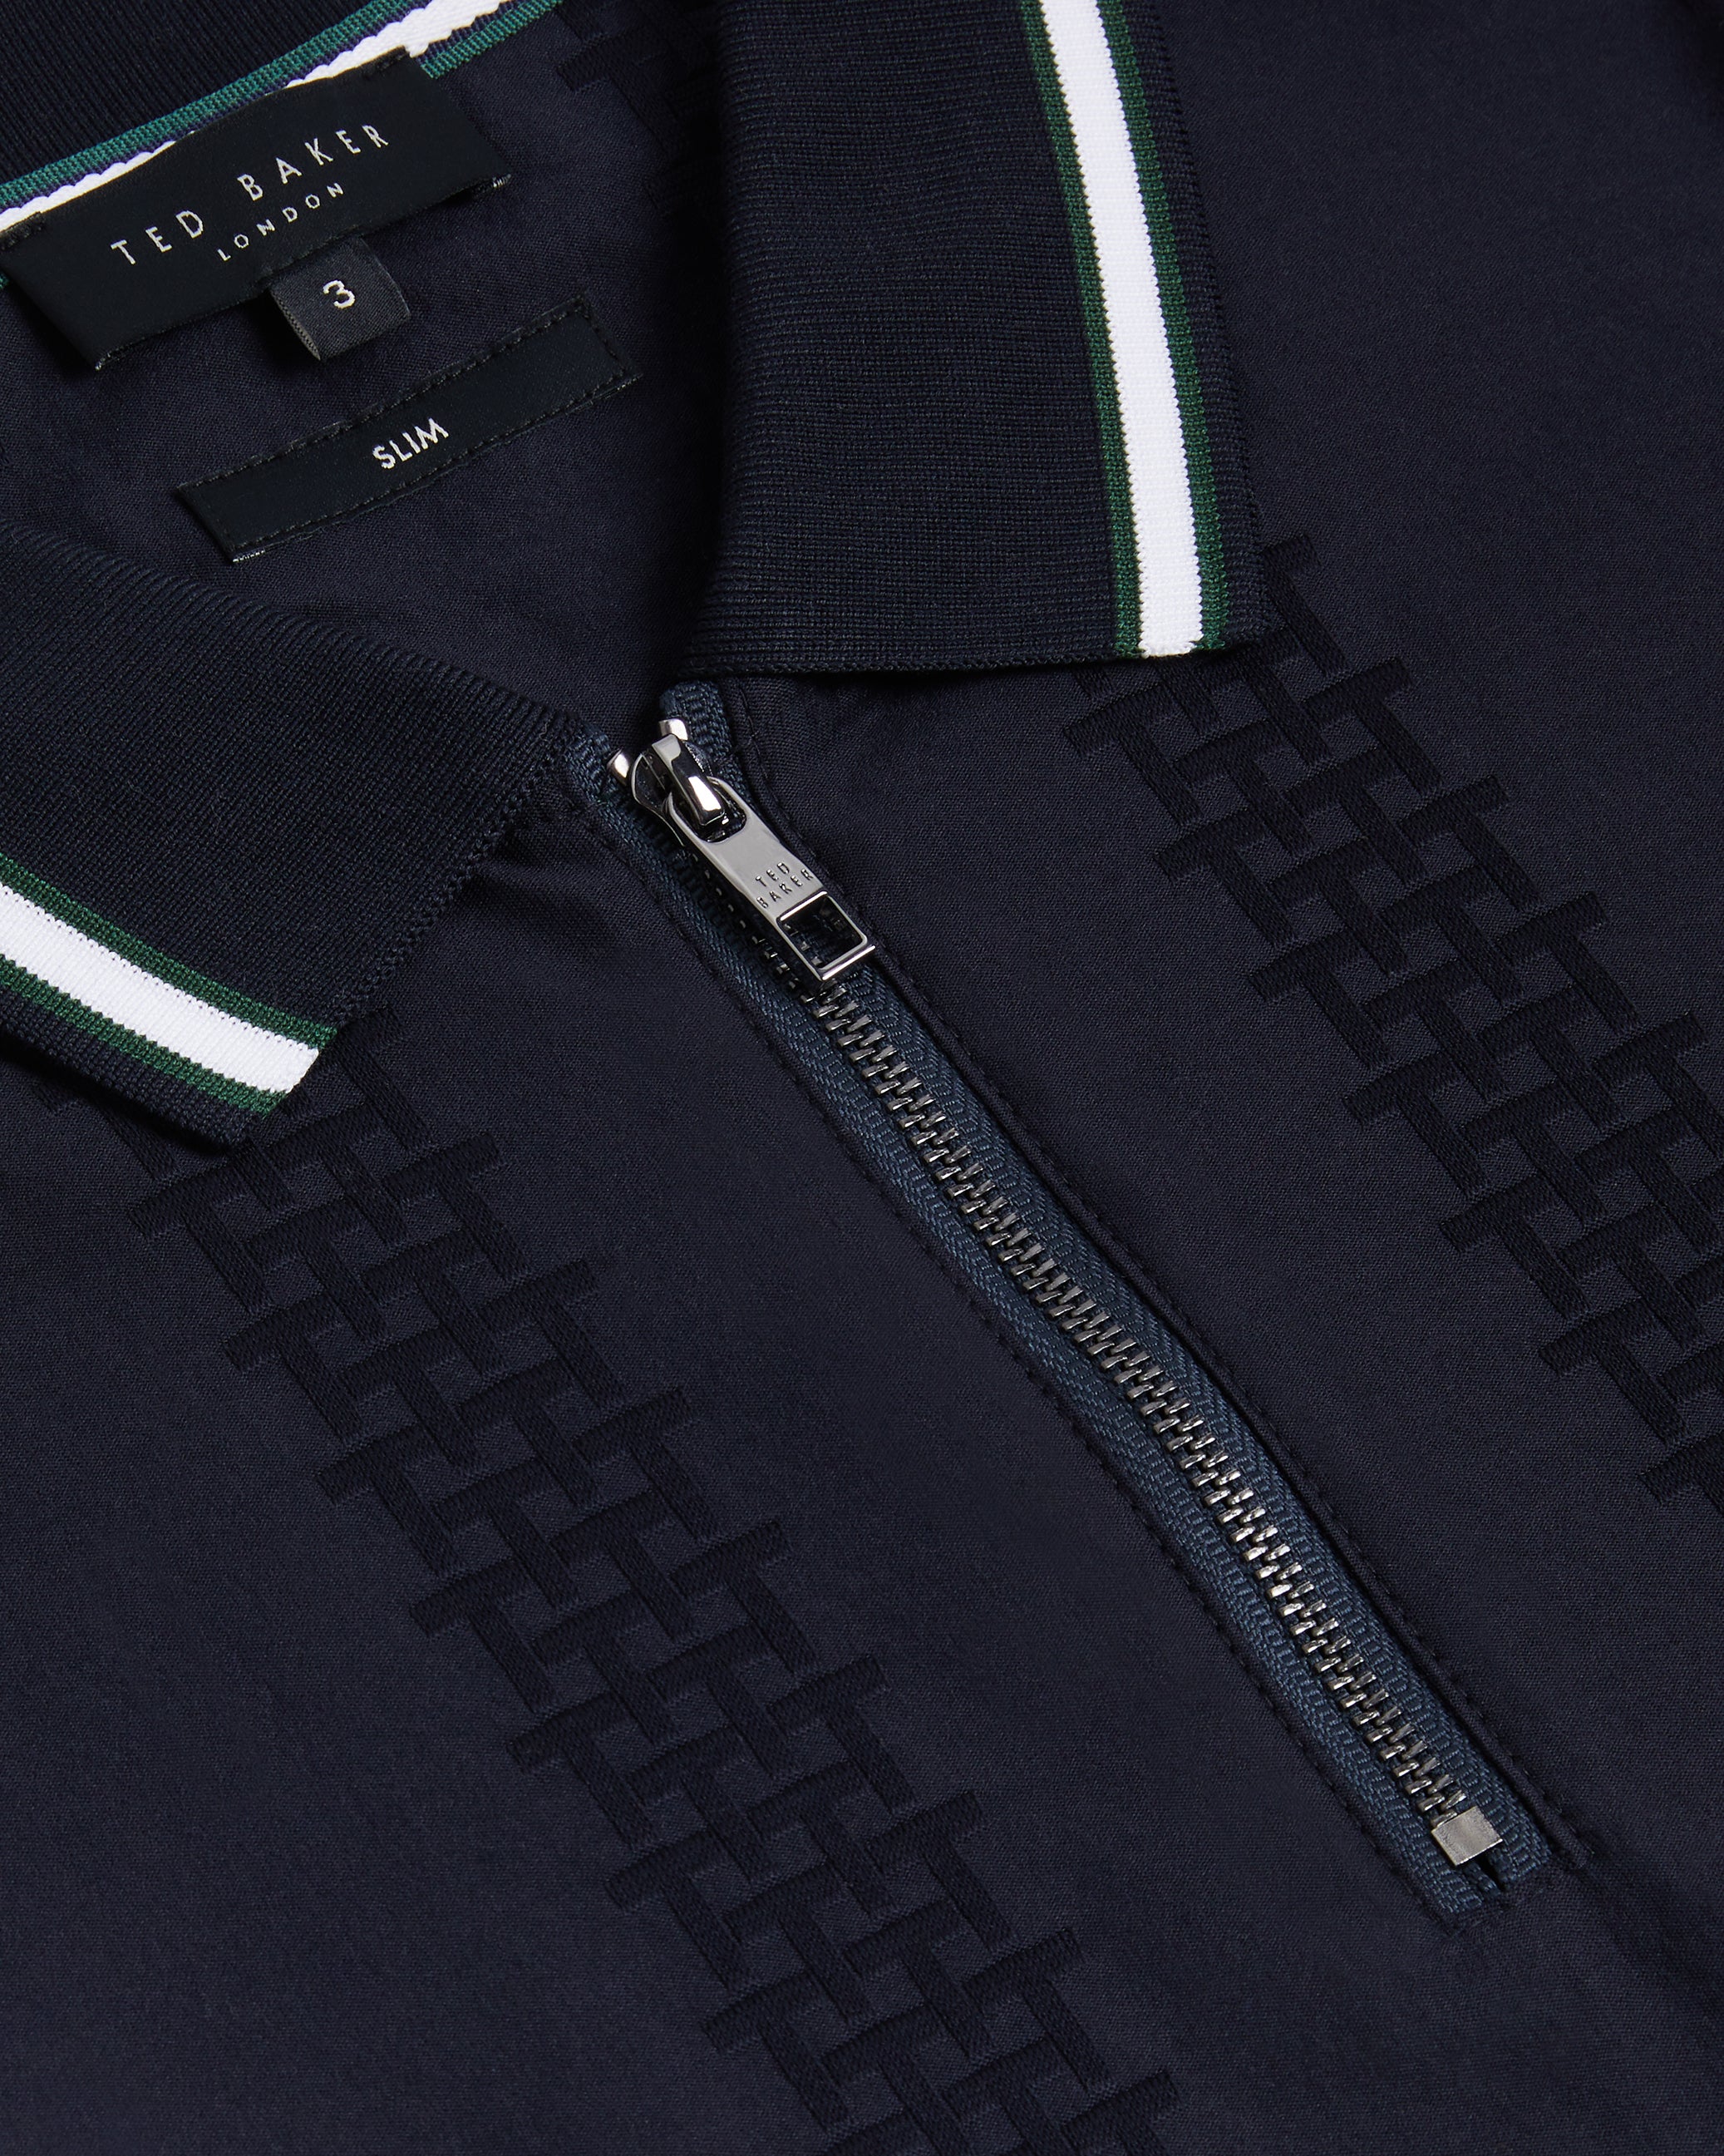 Orbite Slim Fit Jacquard Zip Polo Shirt Navy